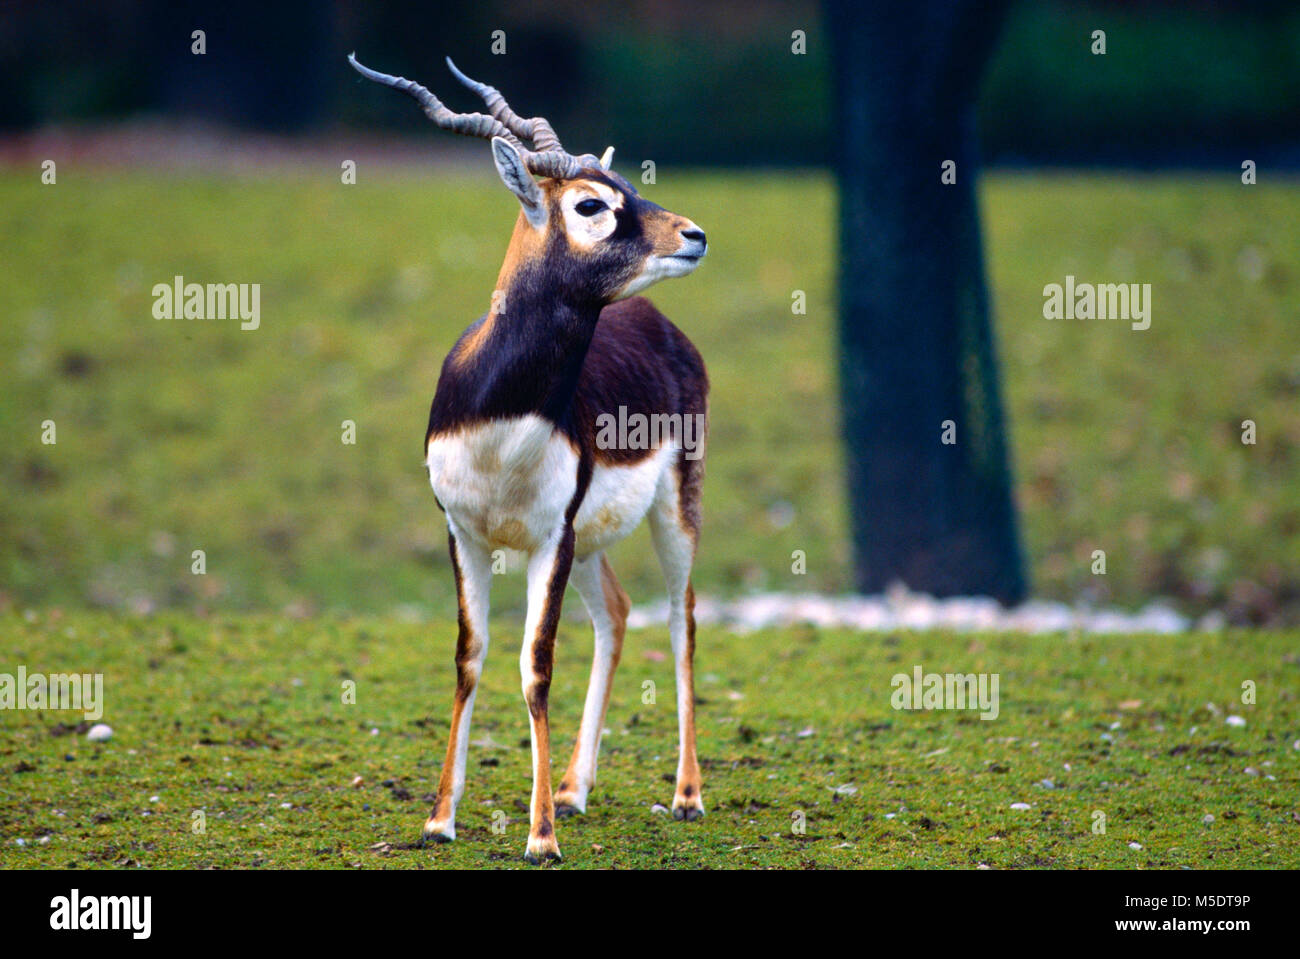 Hirschziegenantilope, Antilope cervicapra, Hornträger, Antilope, Säugetier, Tier, Herkunft Asien, Tierpark Hellabrunn, München, Deutschland Stockfoto